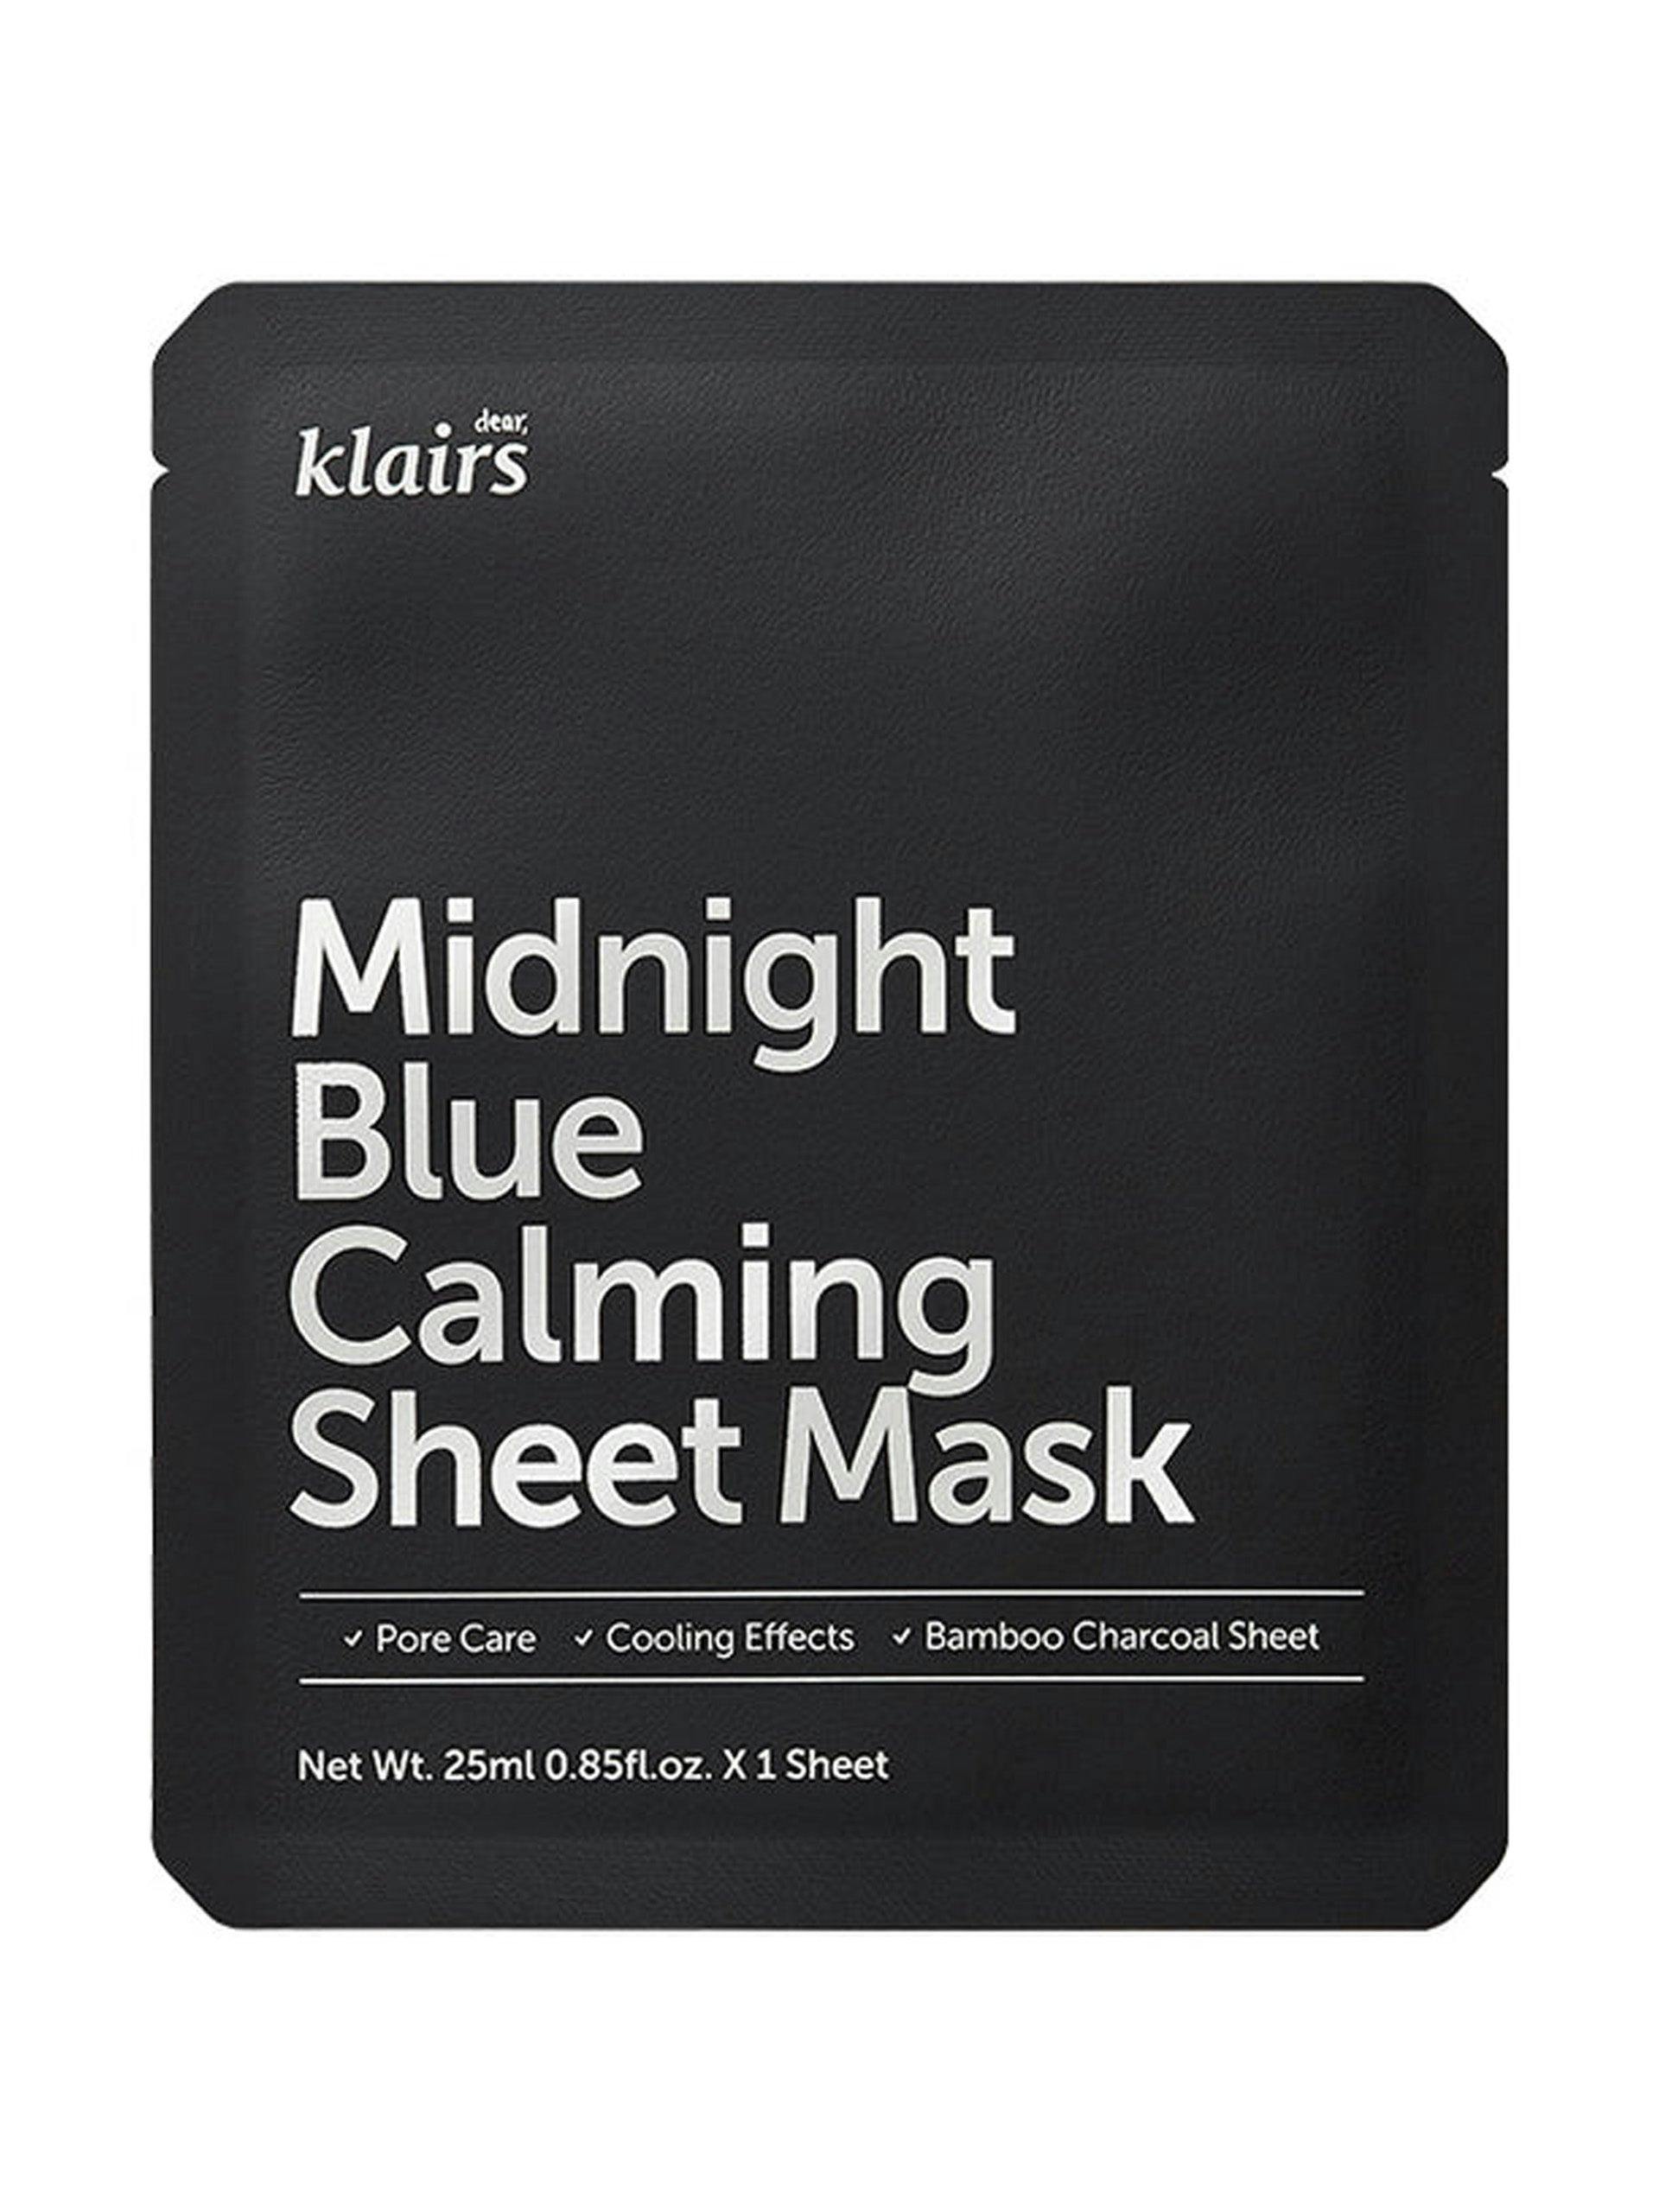 Calming sheet mask